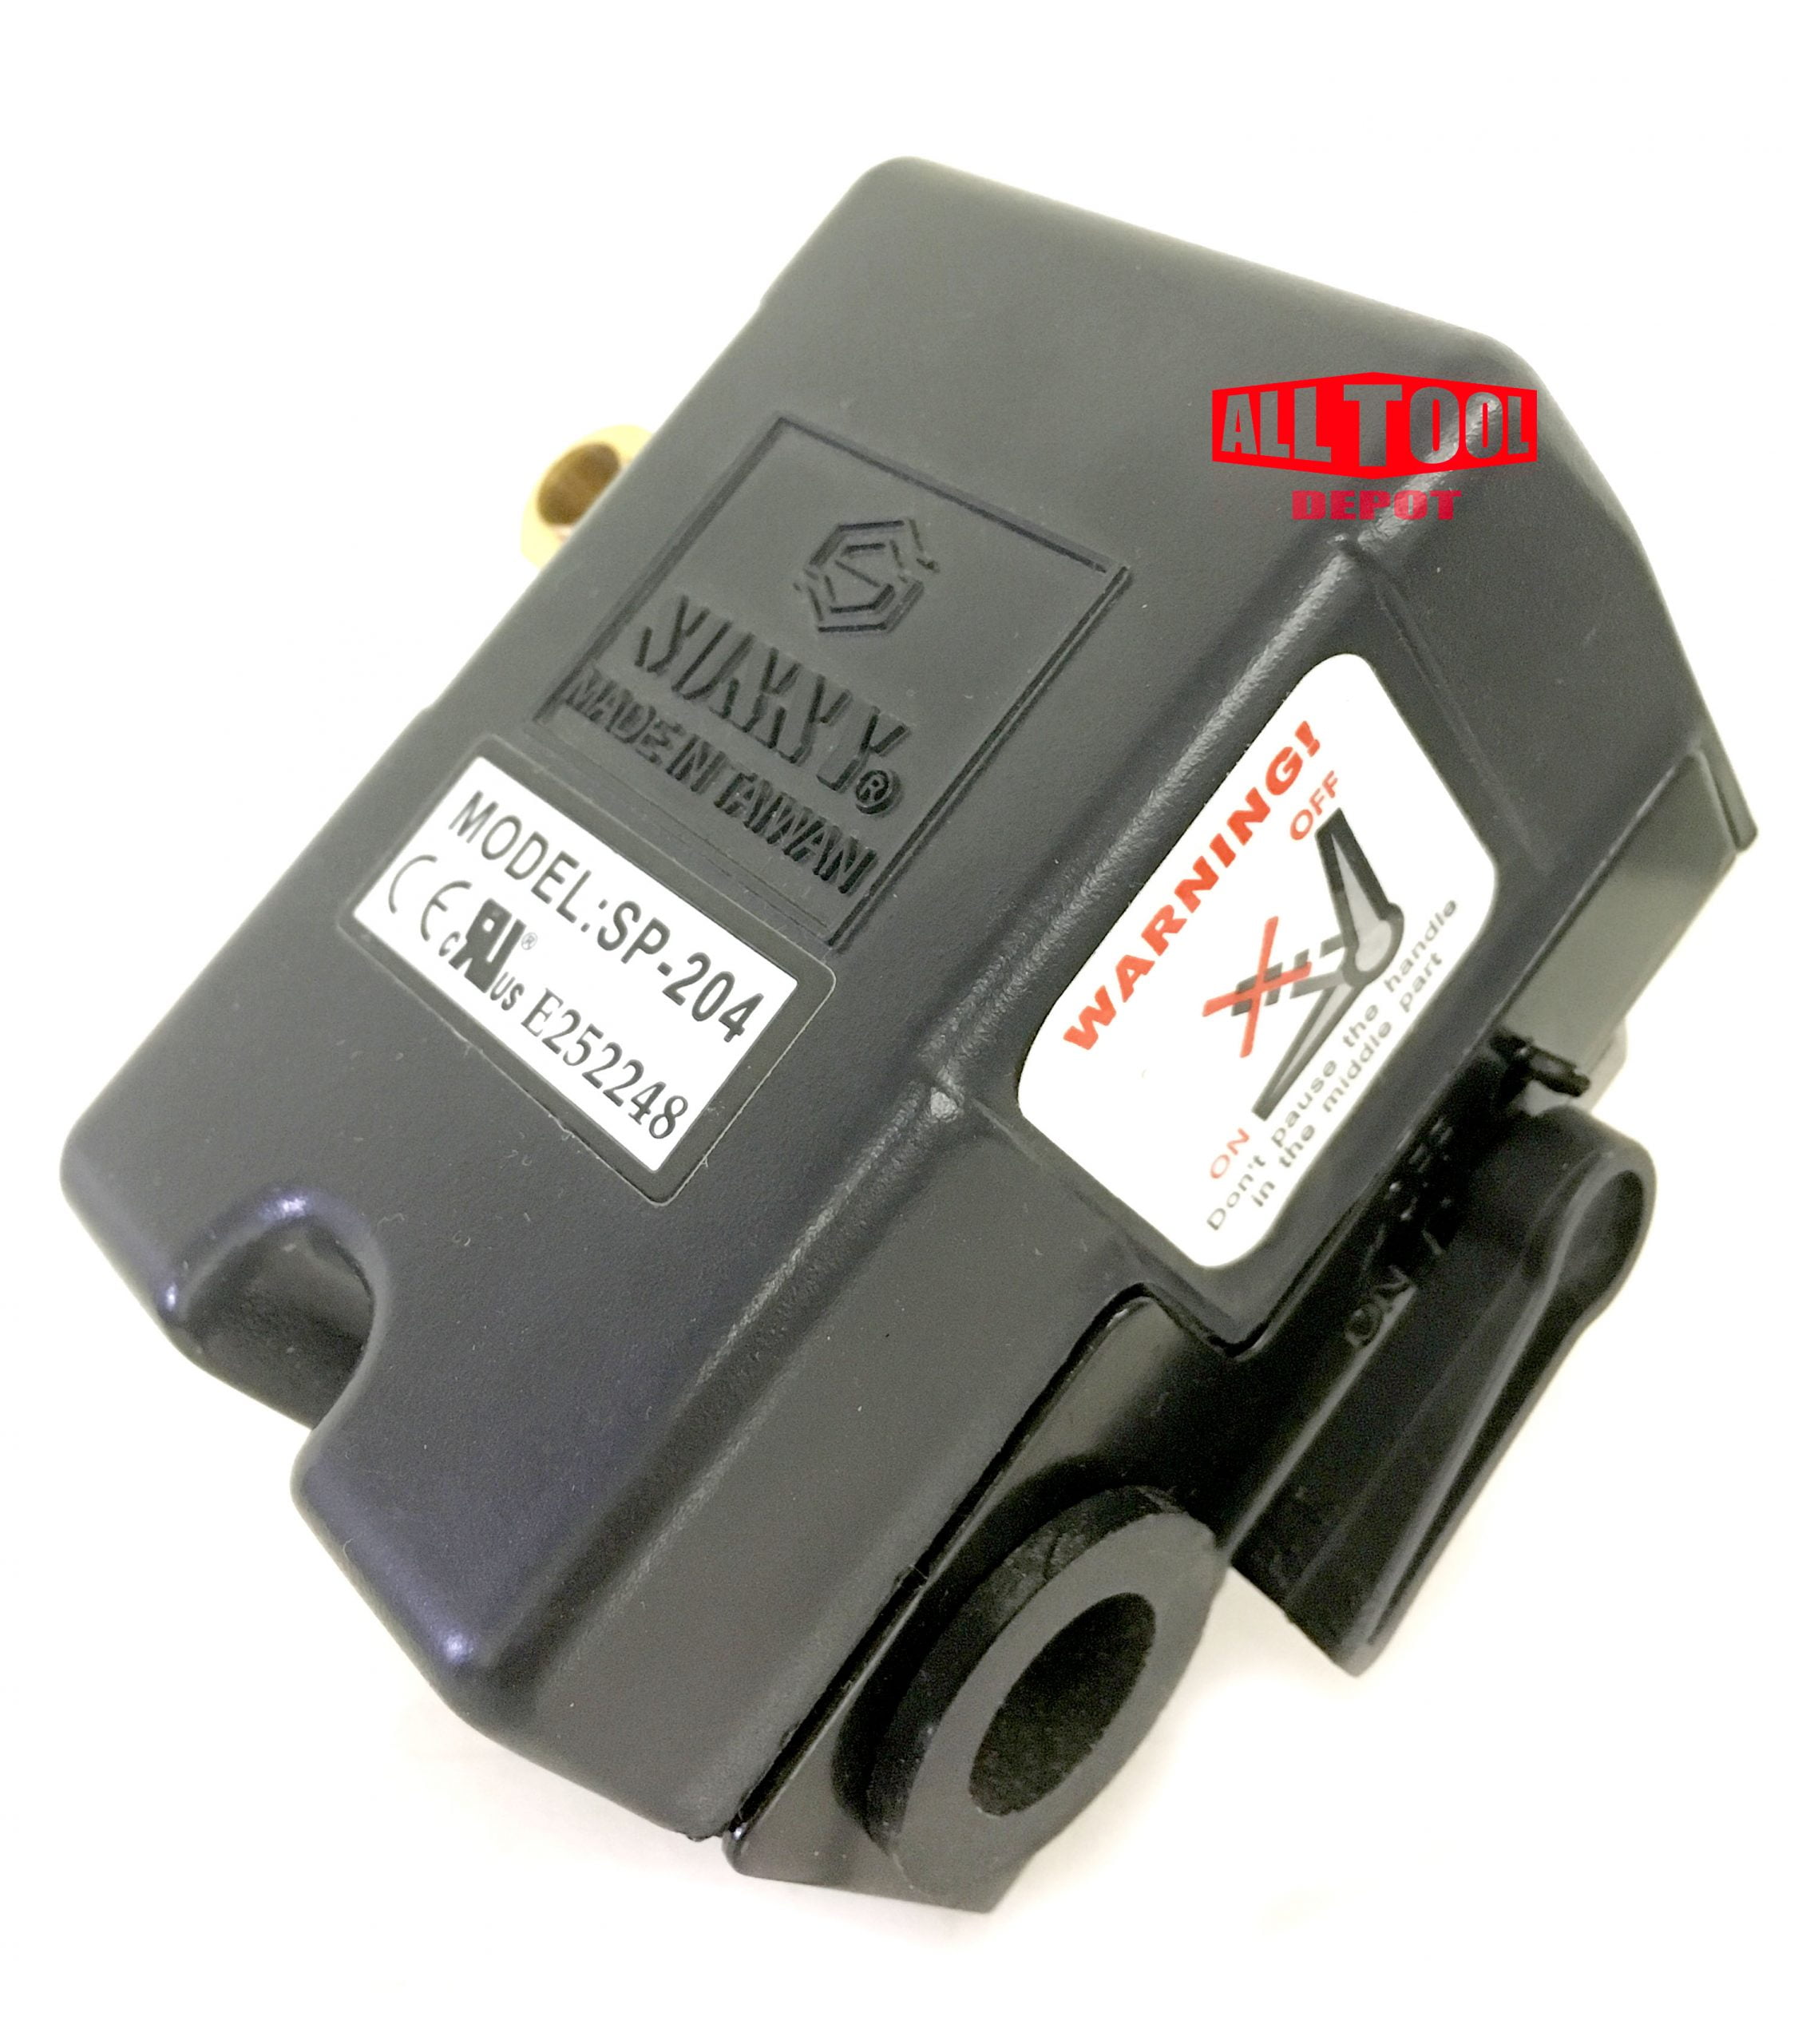 Replacement Air Compressor Pressure Switch Sunny L1 25 Amp 1 port 95-125 PSI 